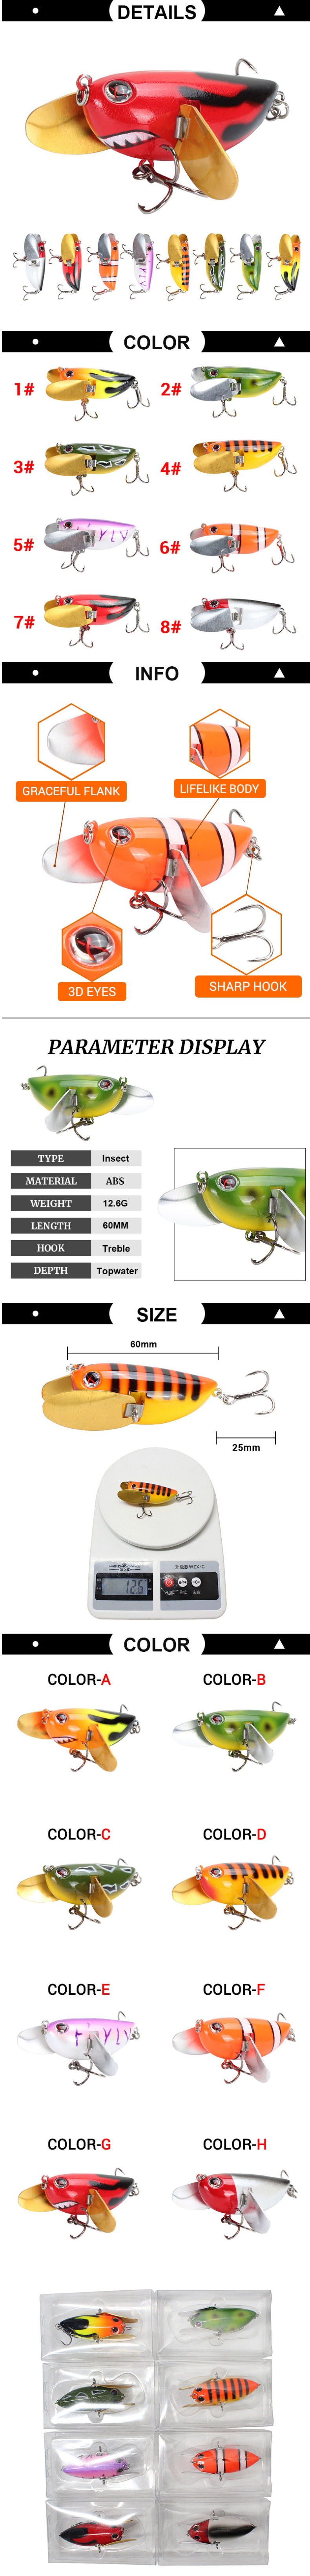 Amlucas-6cm126g-8Colors-ABS-Fishing-Lure-Treble-Hook-Topwater-Fishing-Bait-1551998-1